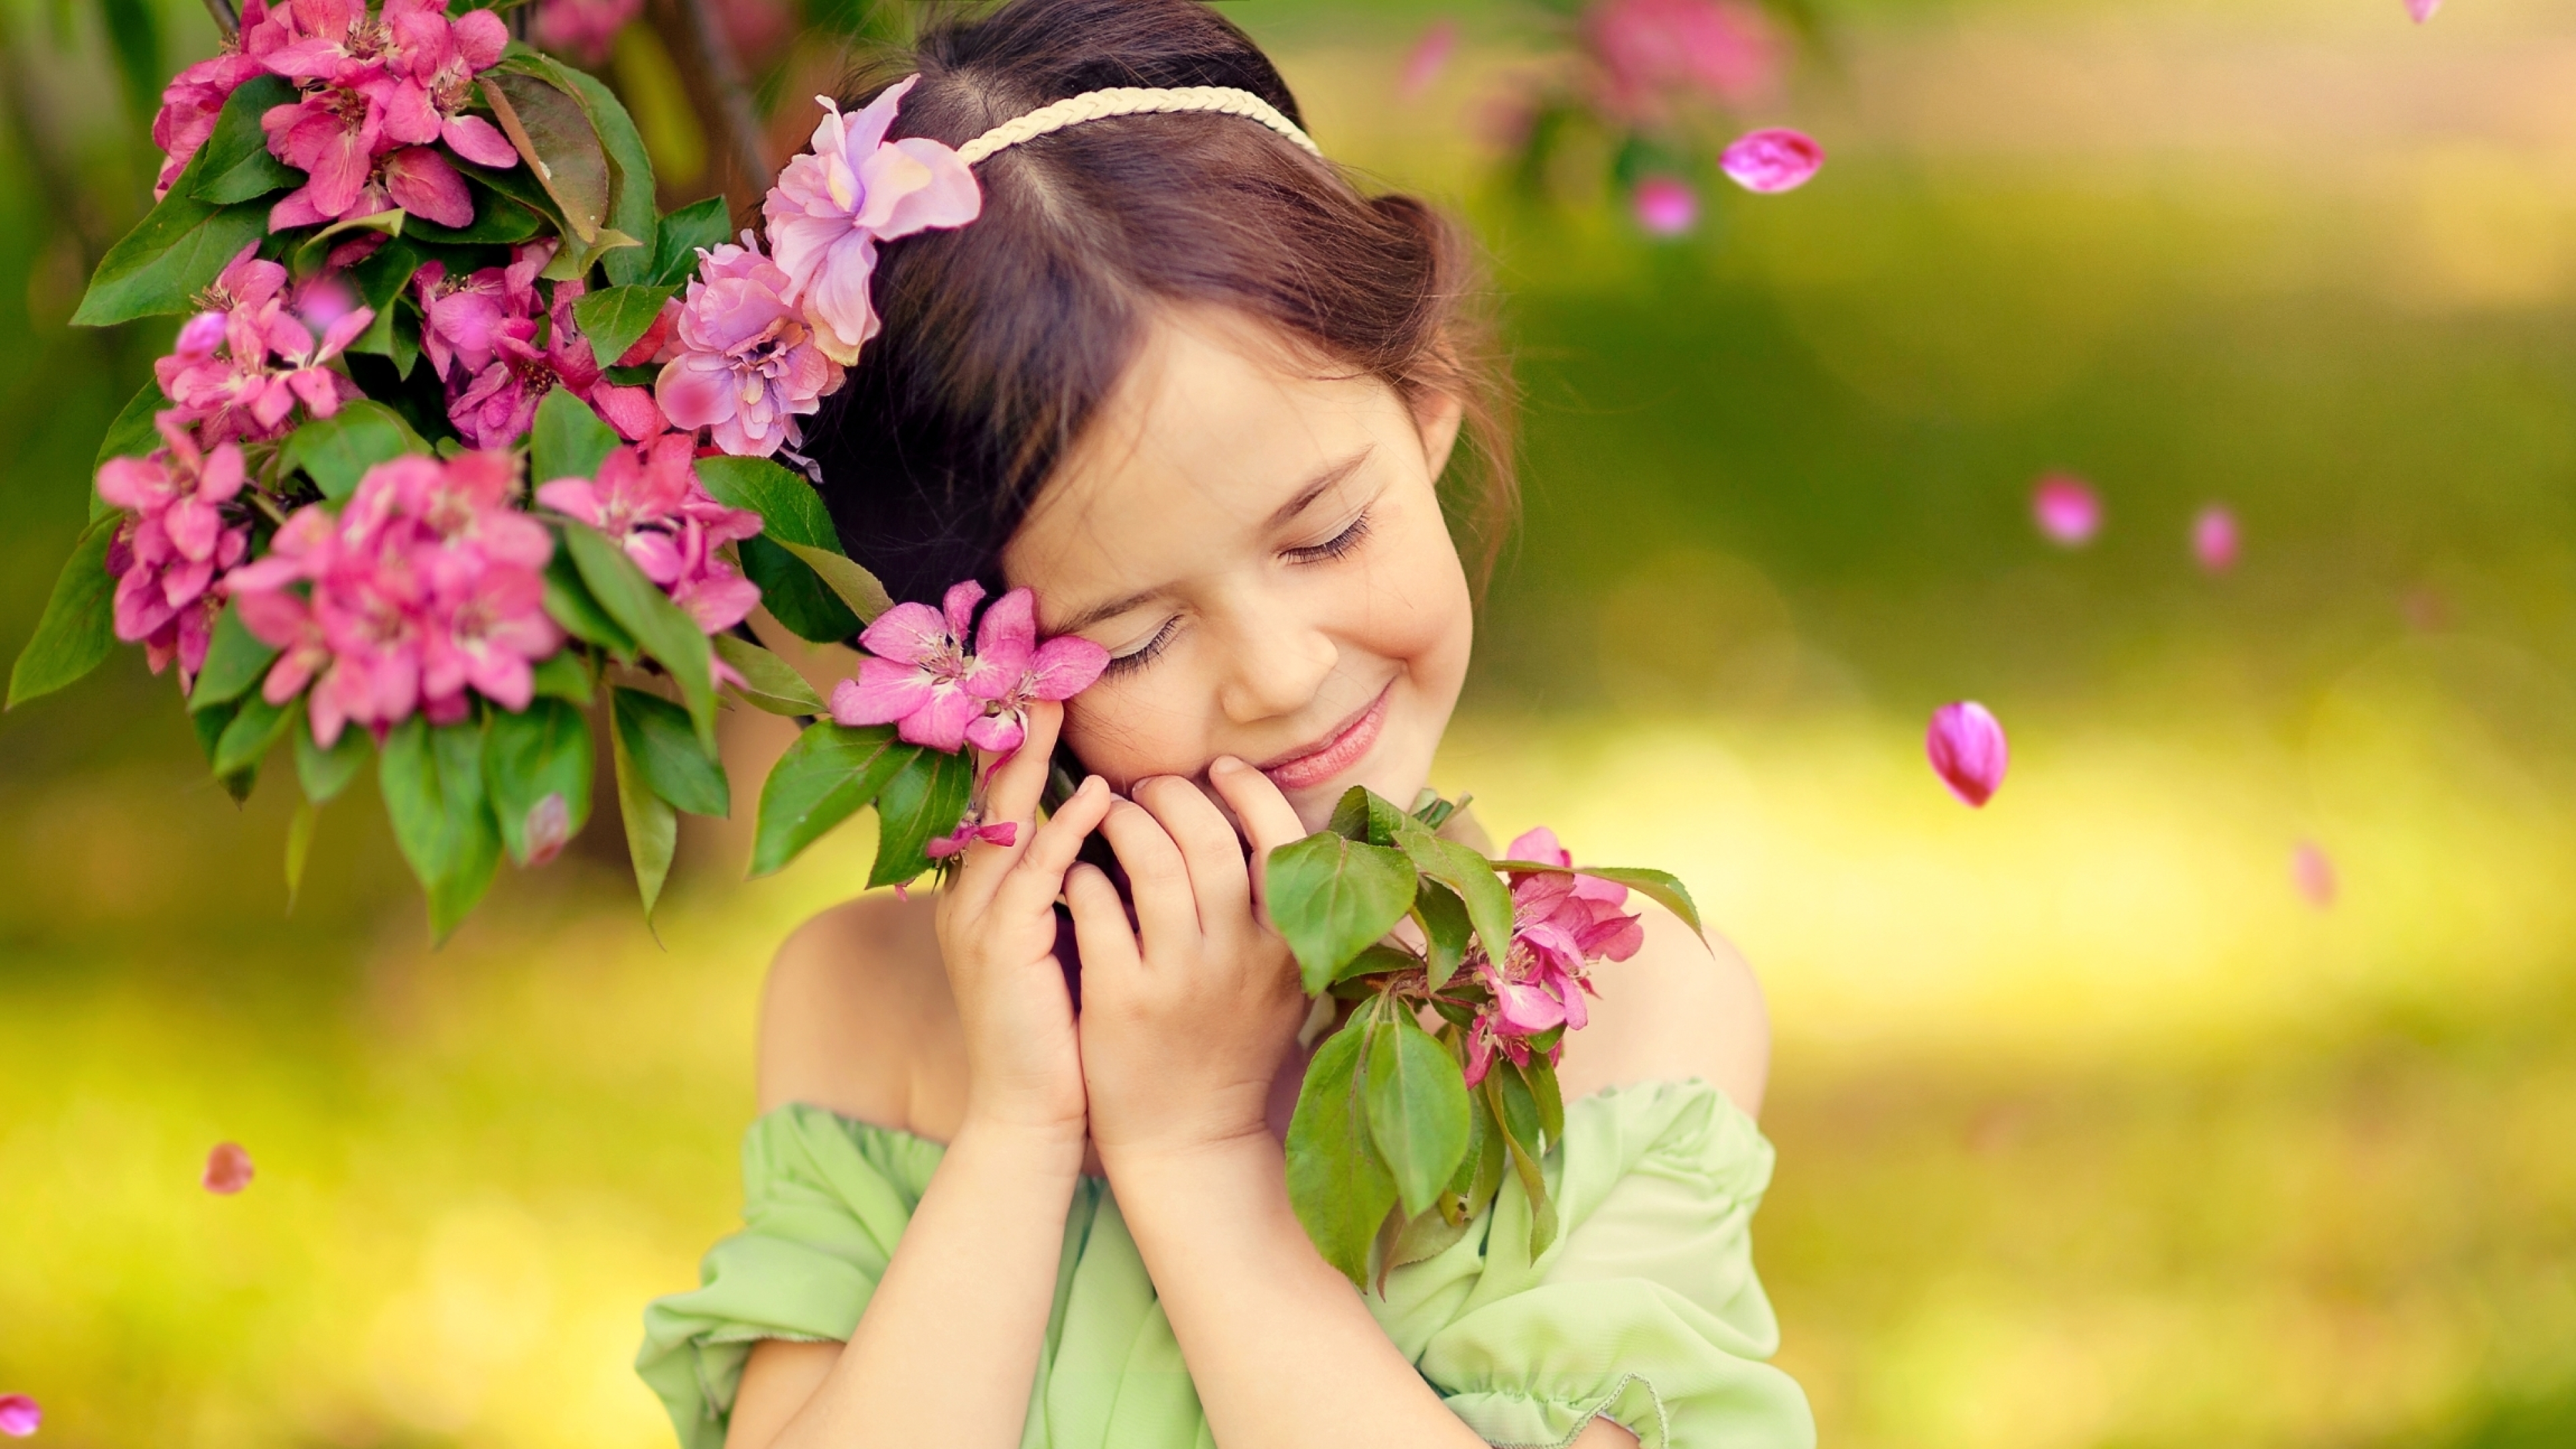 Ребенок с цветами